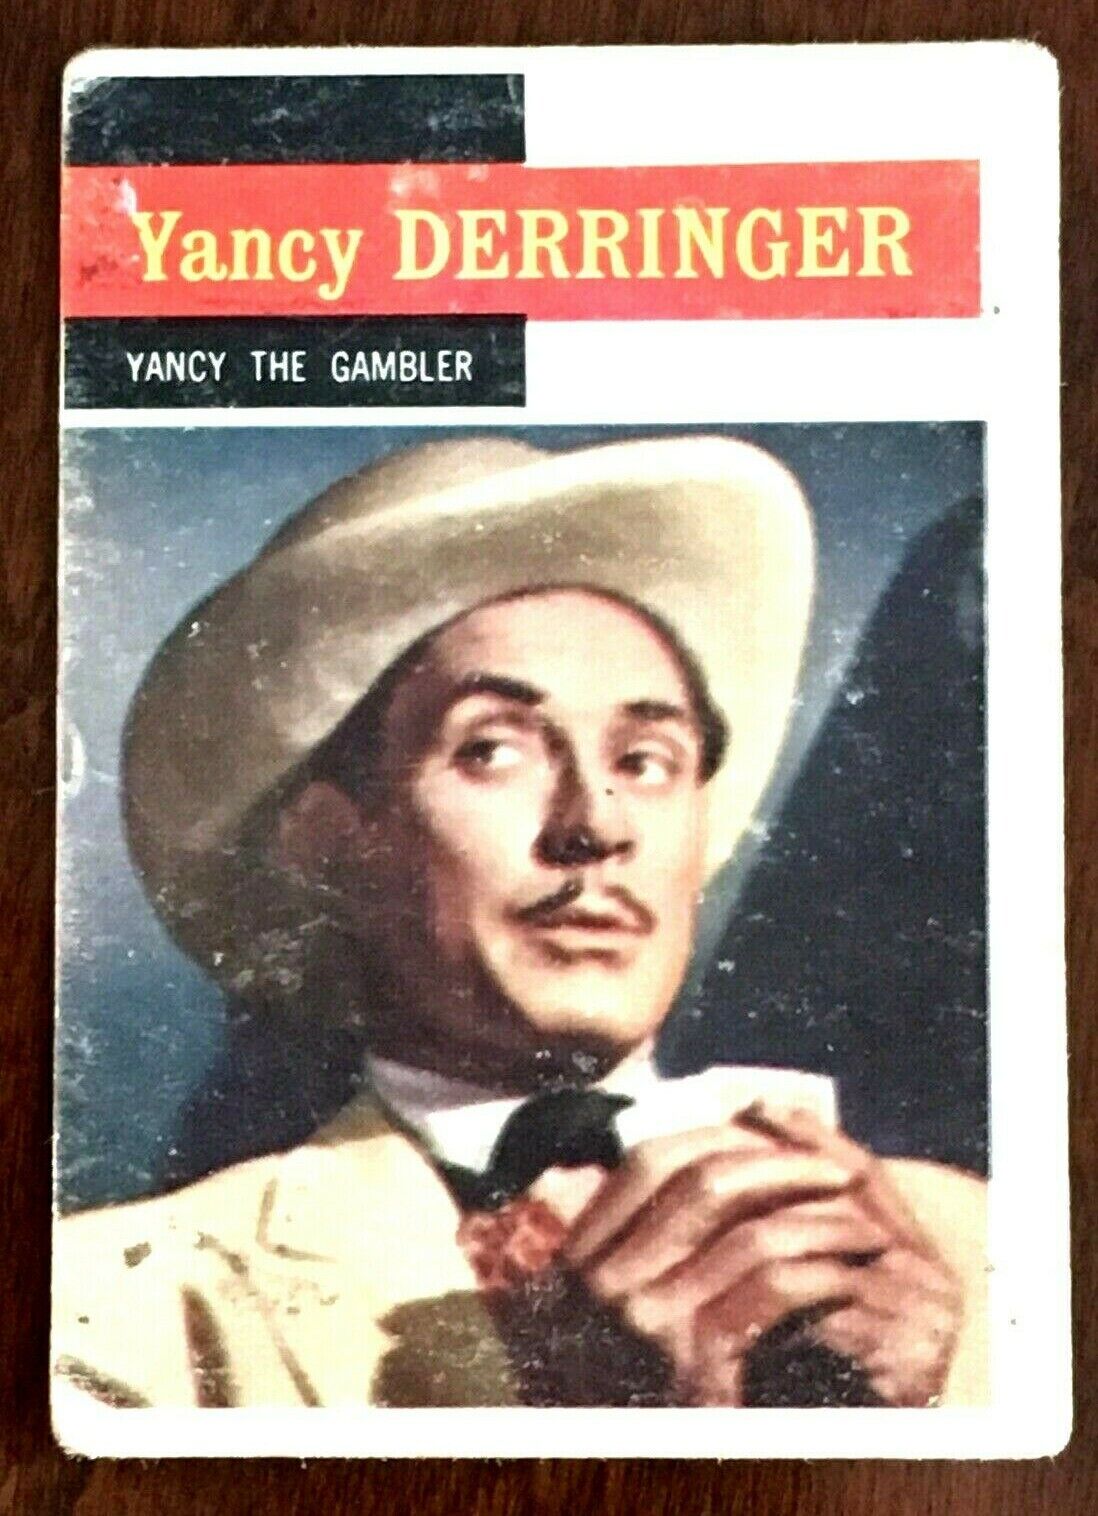 Topps T.V. Western Trading Card #38  YANCY DERRINGER The Gambler  1958